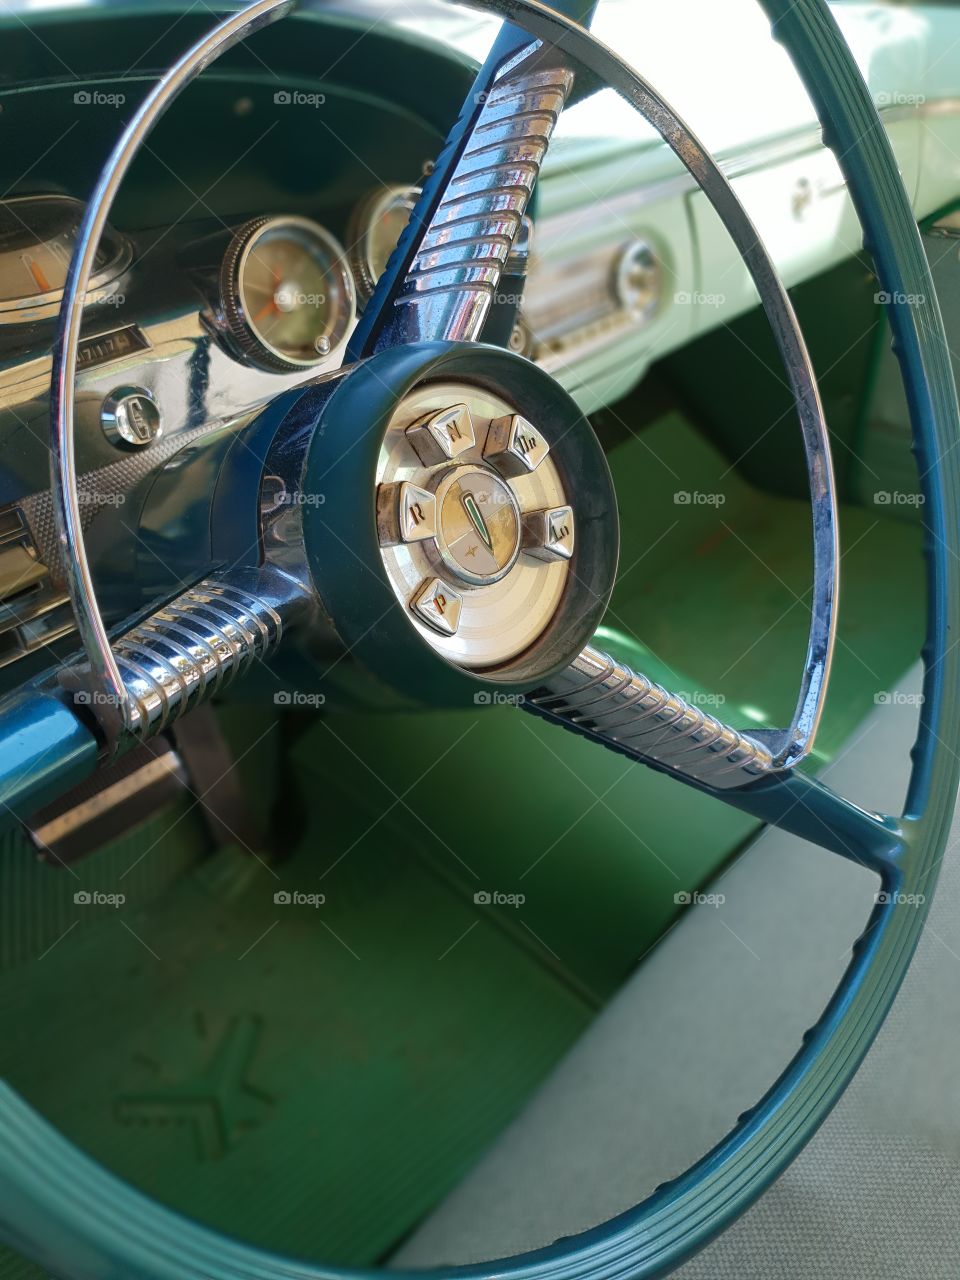 classic car dash. vintage car exhibition